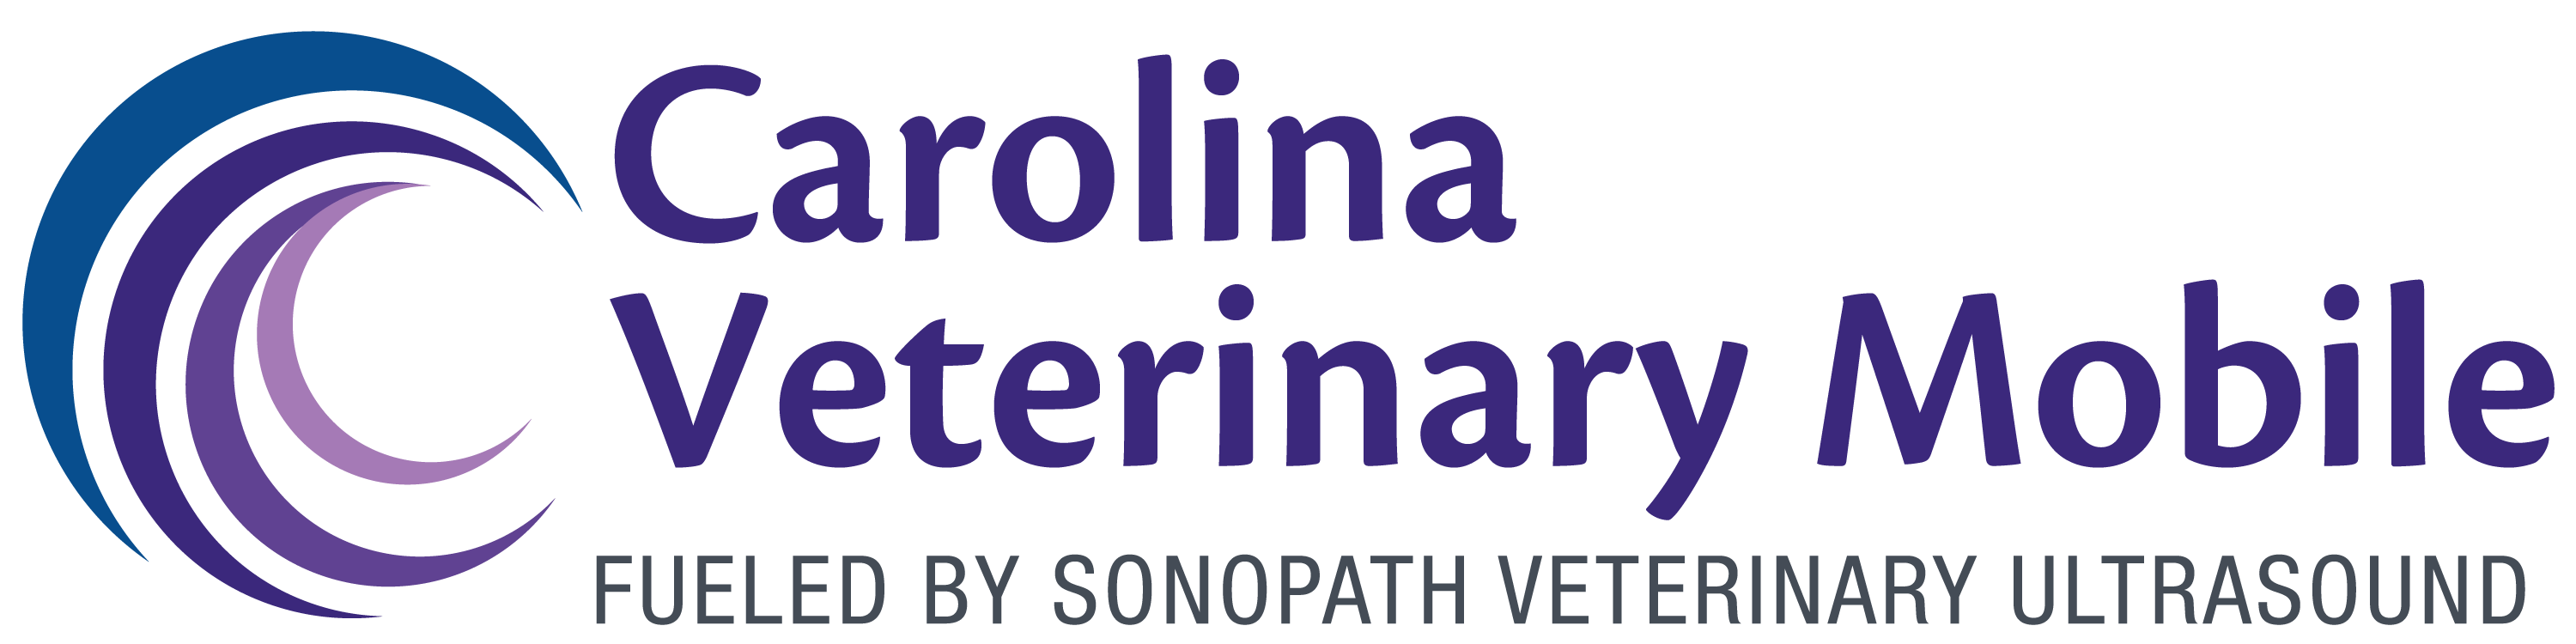 Carolina Veterinary Mobile, LLC